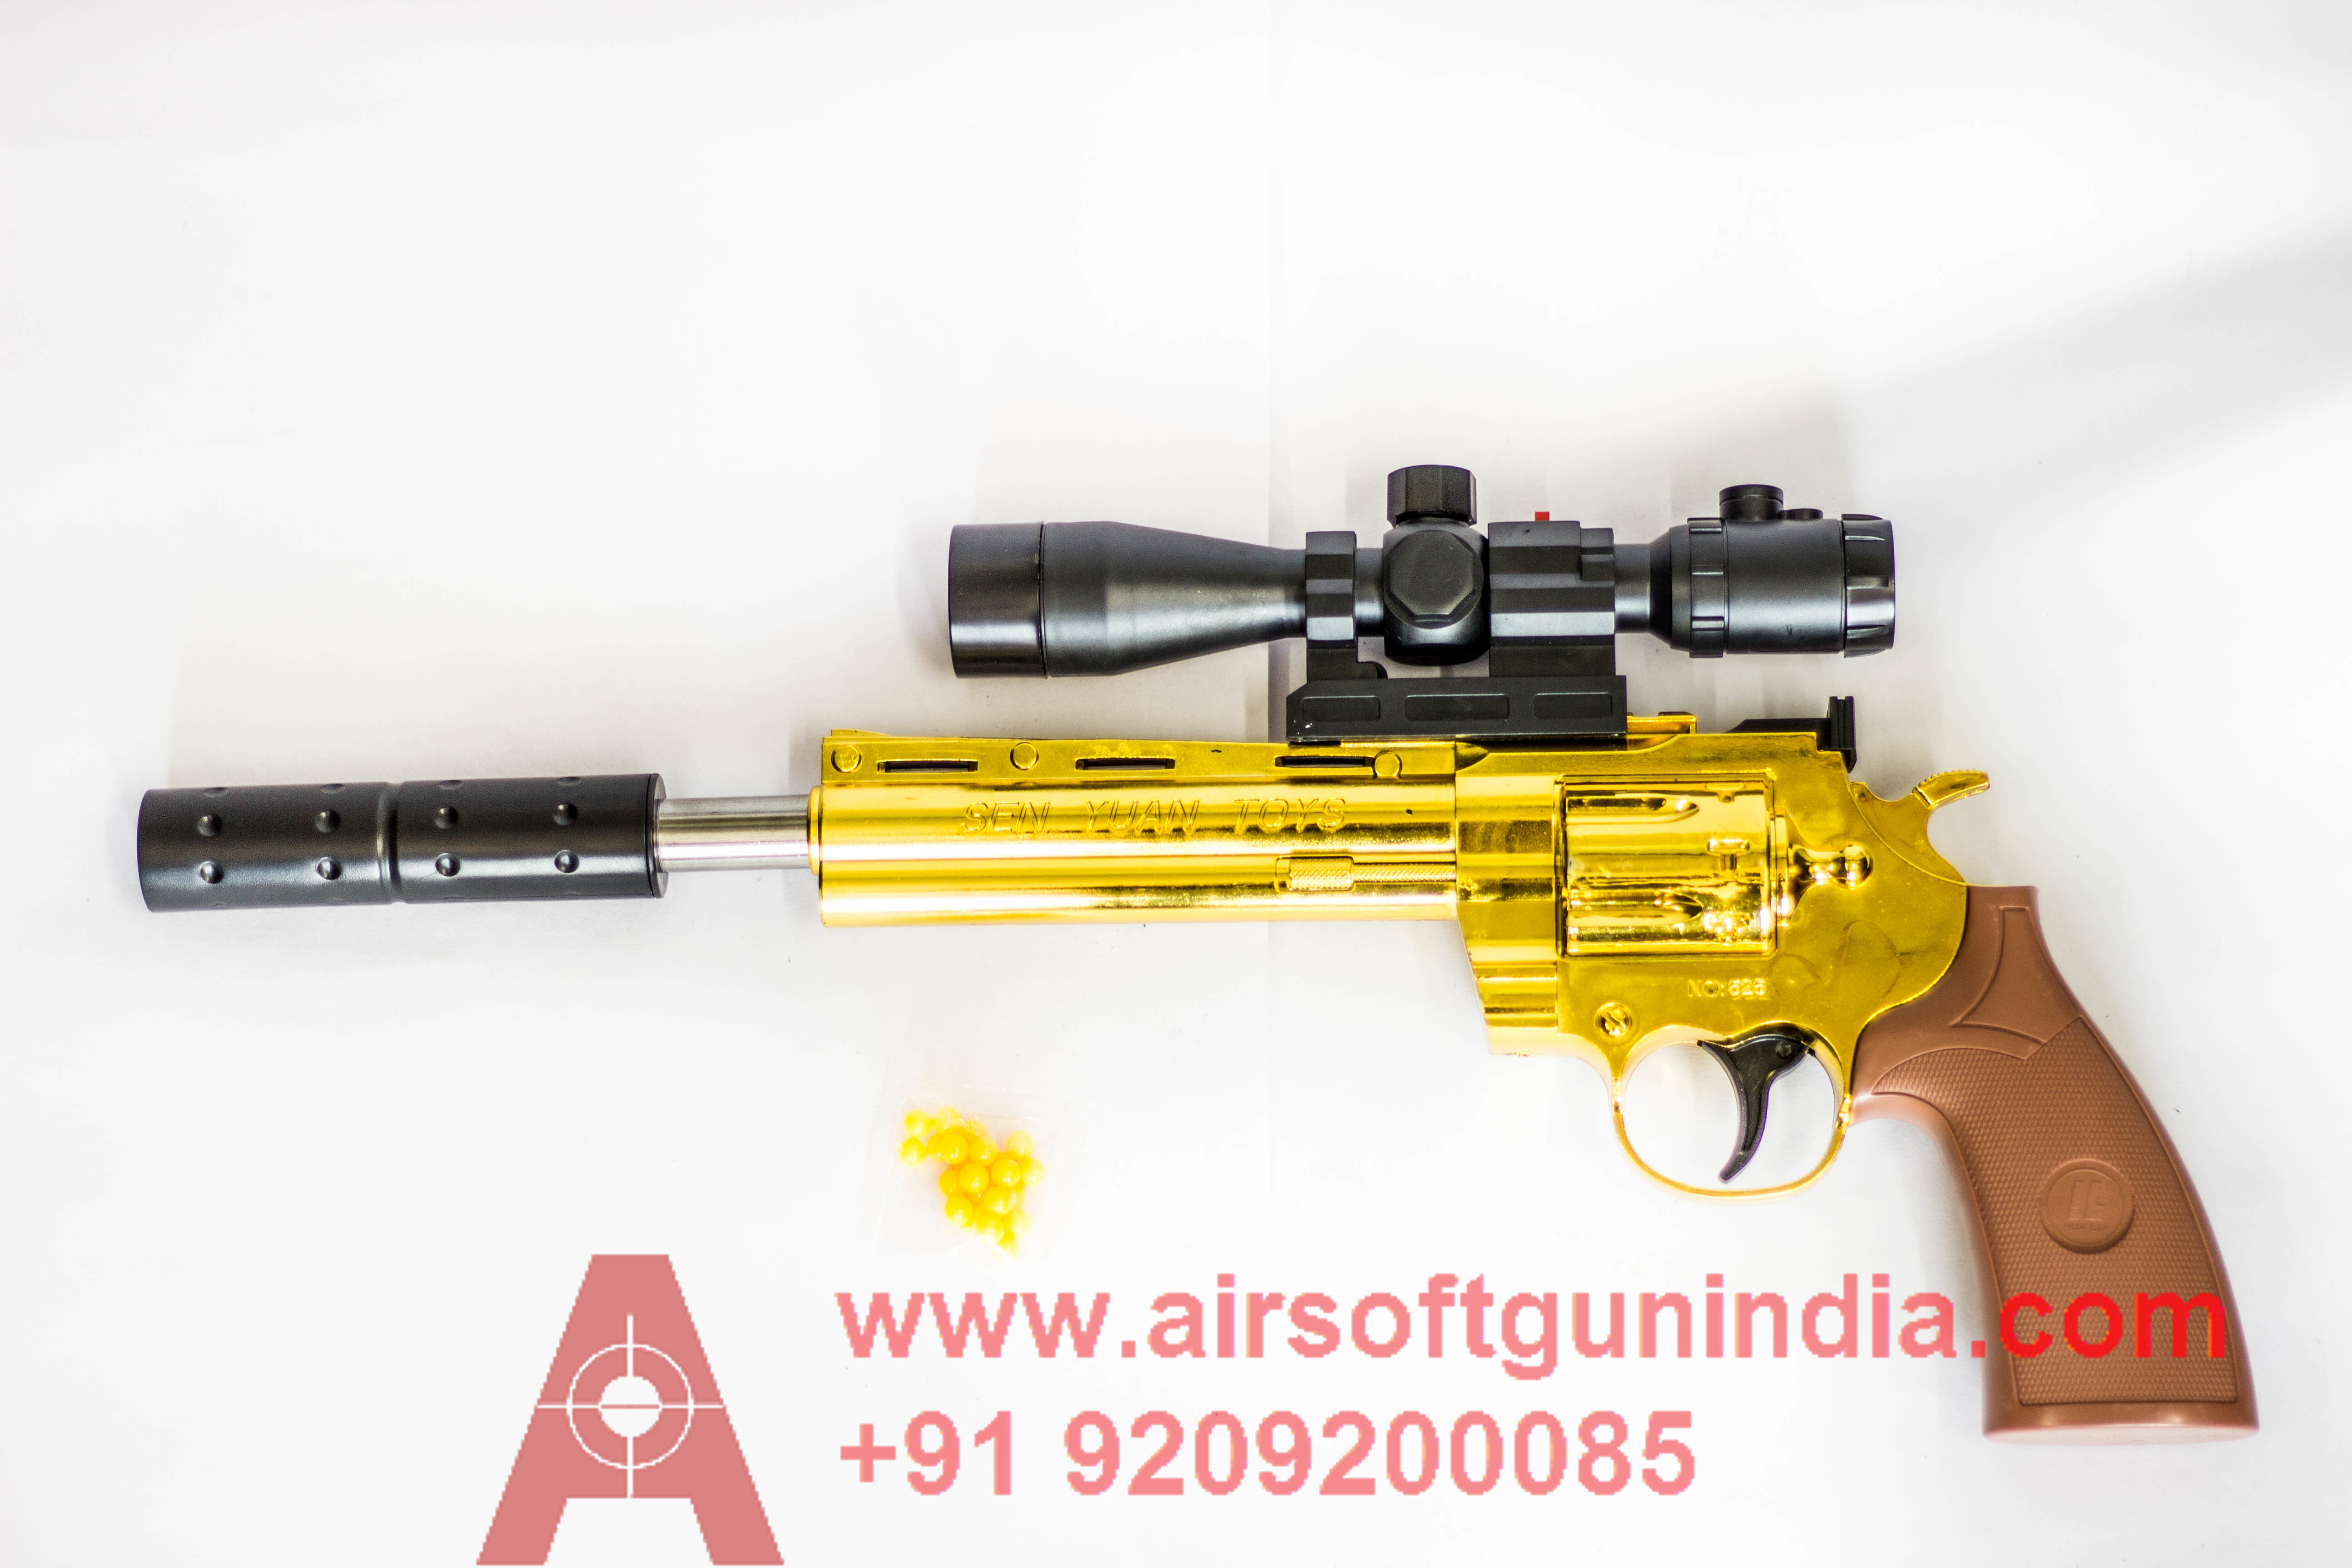 Anaconda Colt Revolver 525B By Airsoft Gun India